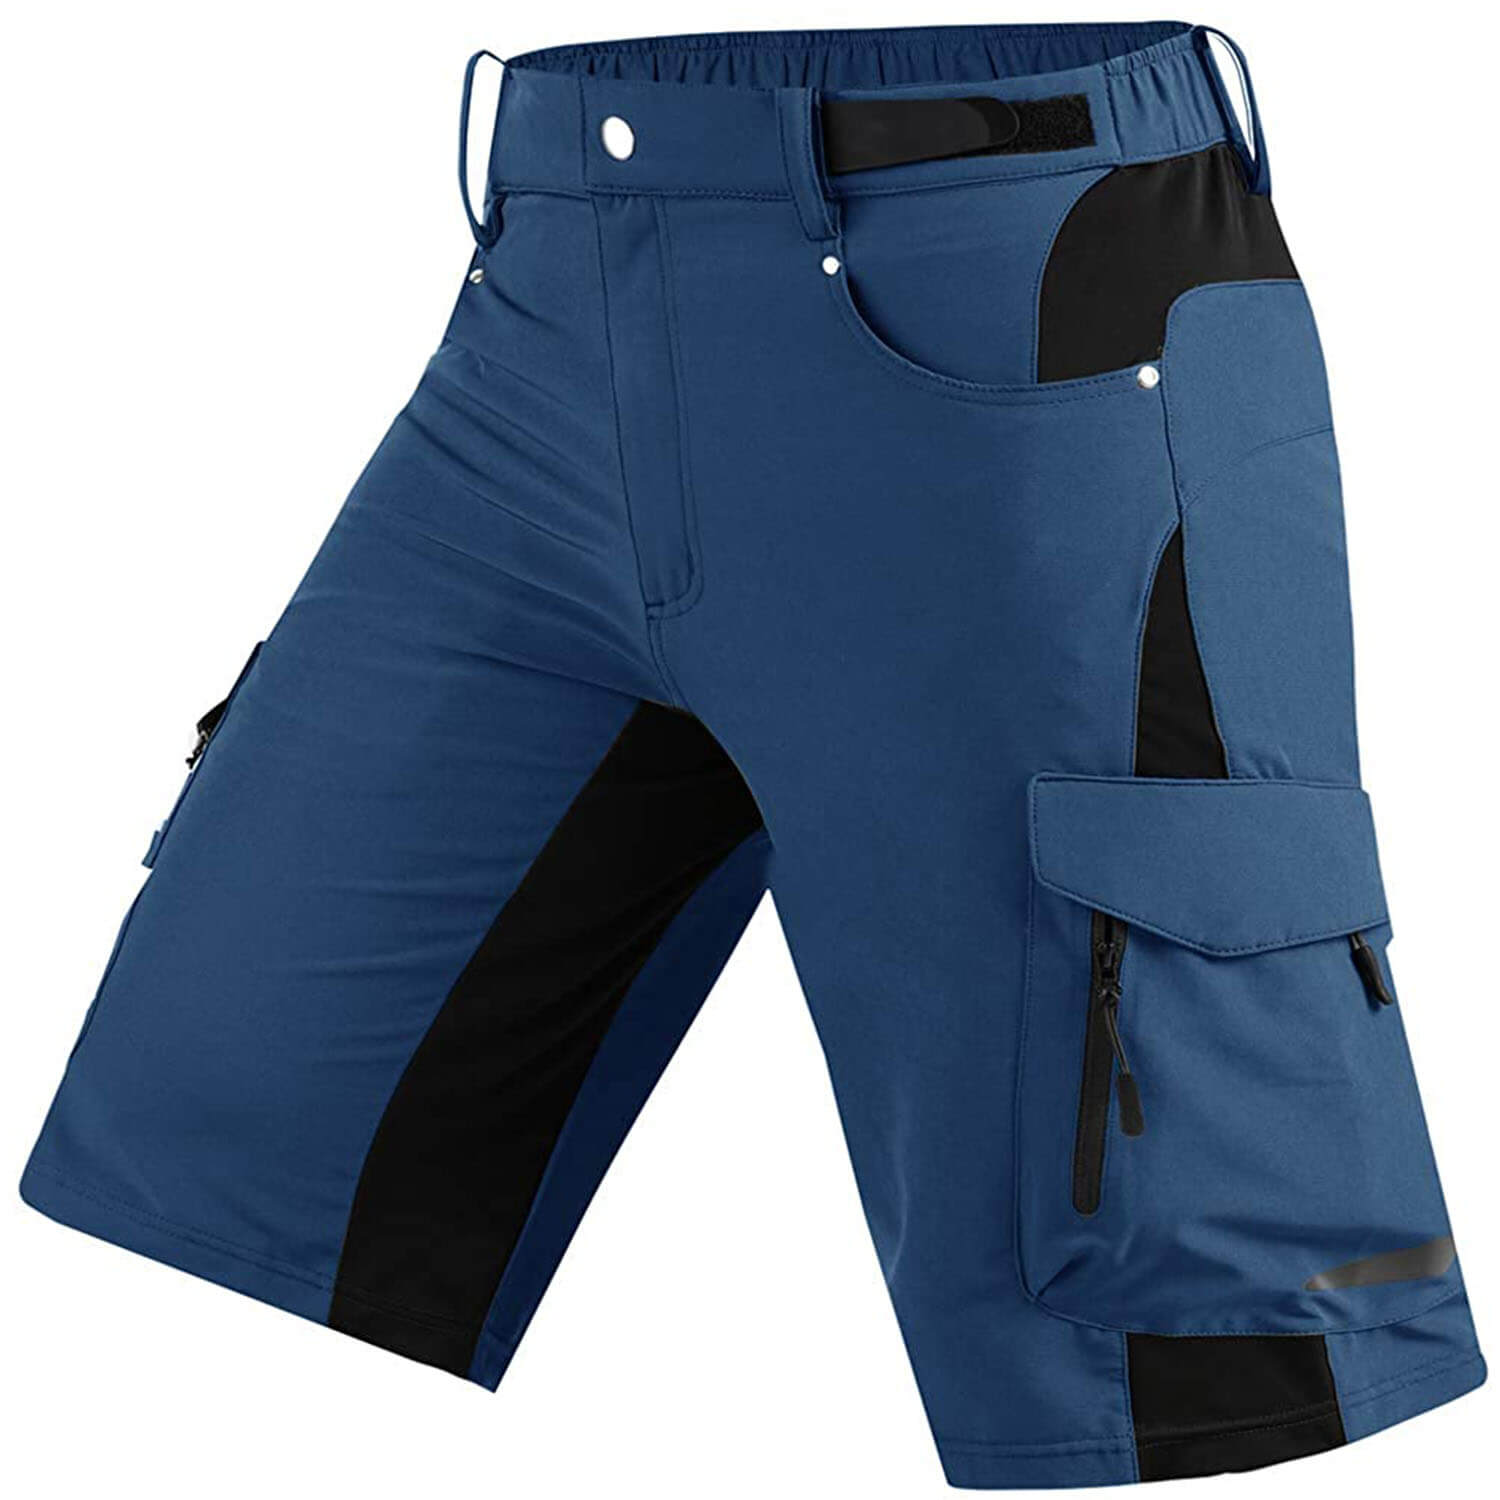 mtb shorts with zip pockets